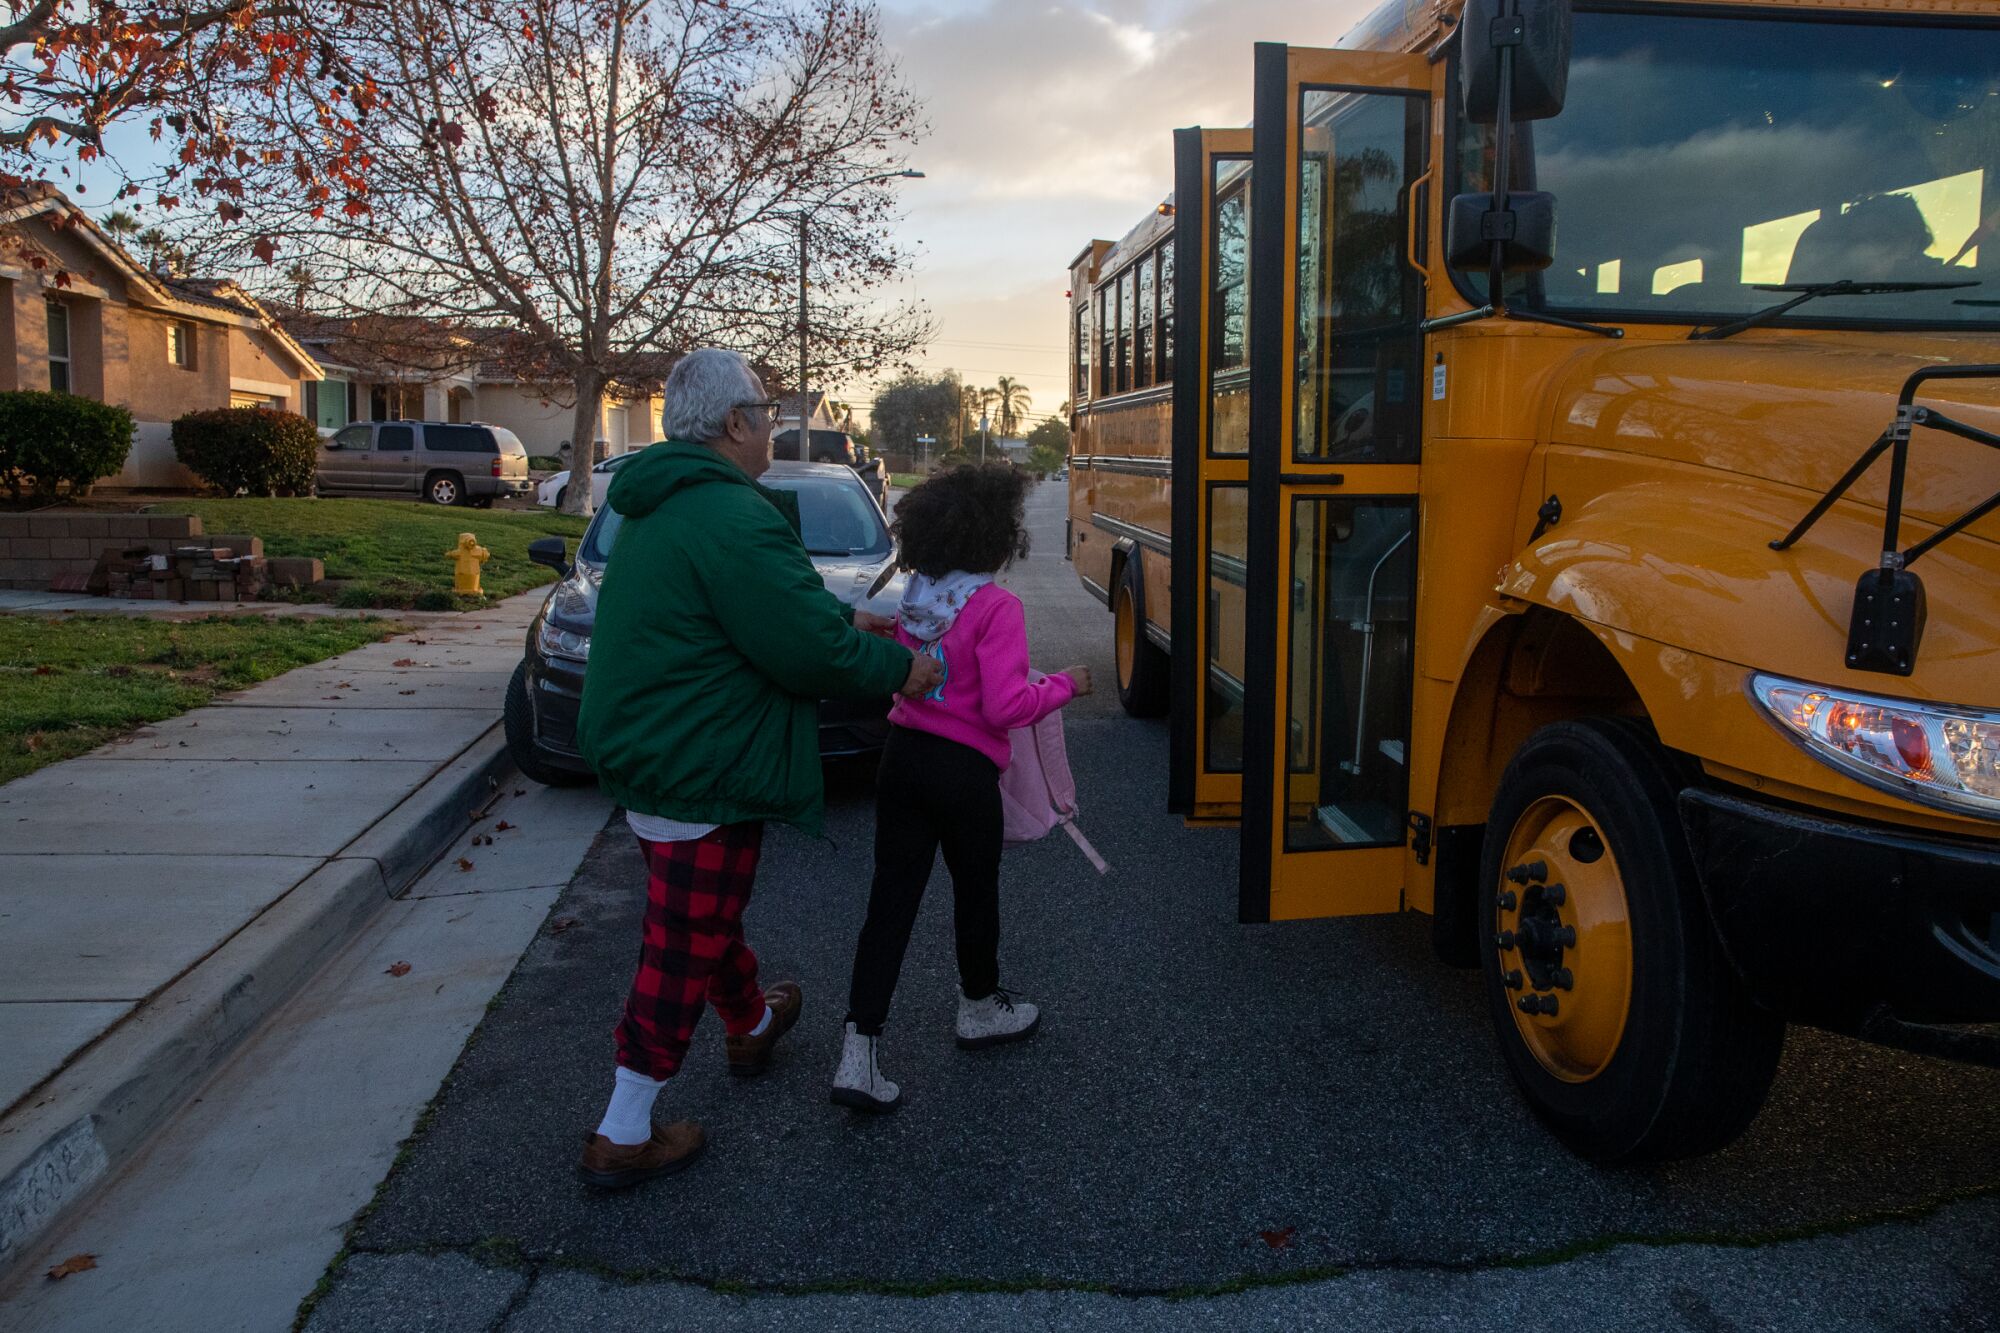 A man helps a girl onto a school bus